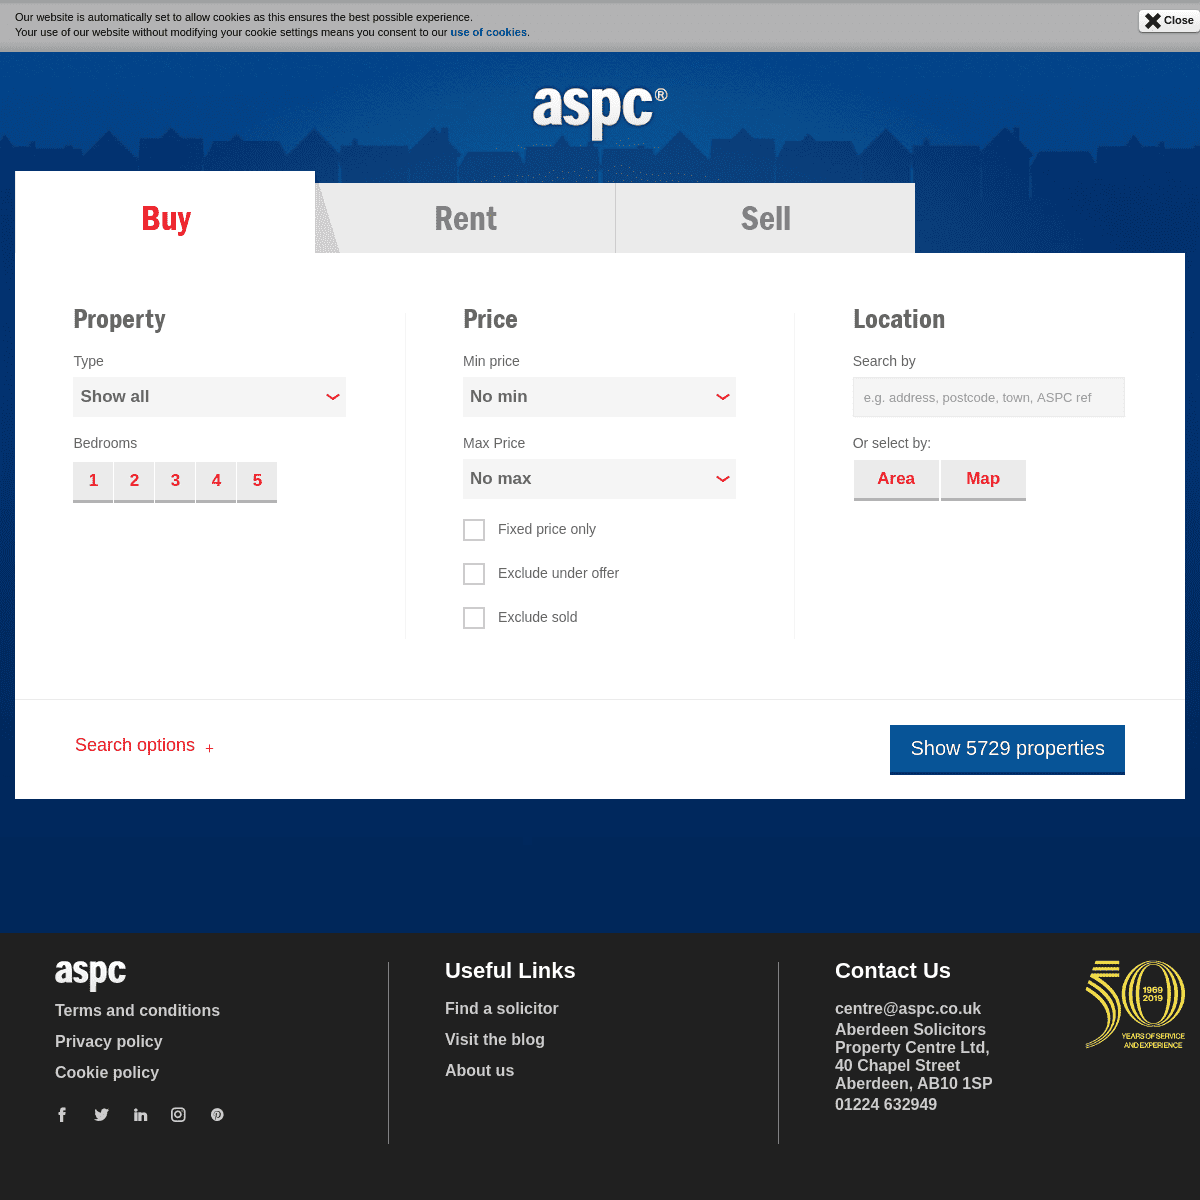 A complete backup of aspc.co.uk